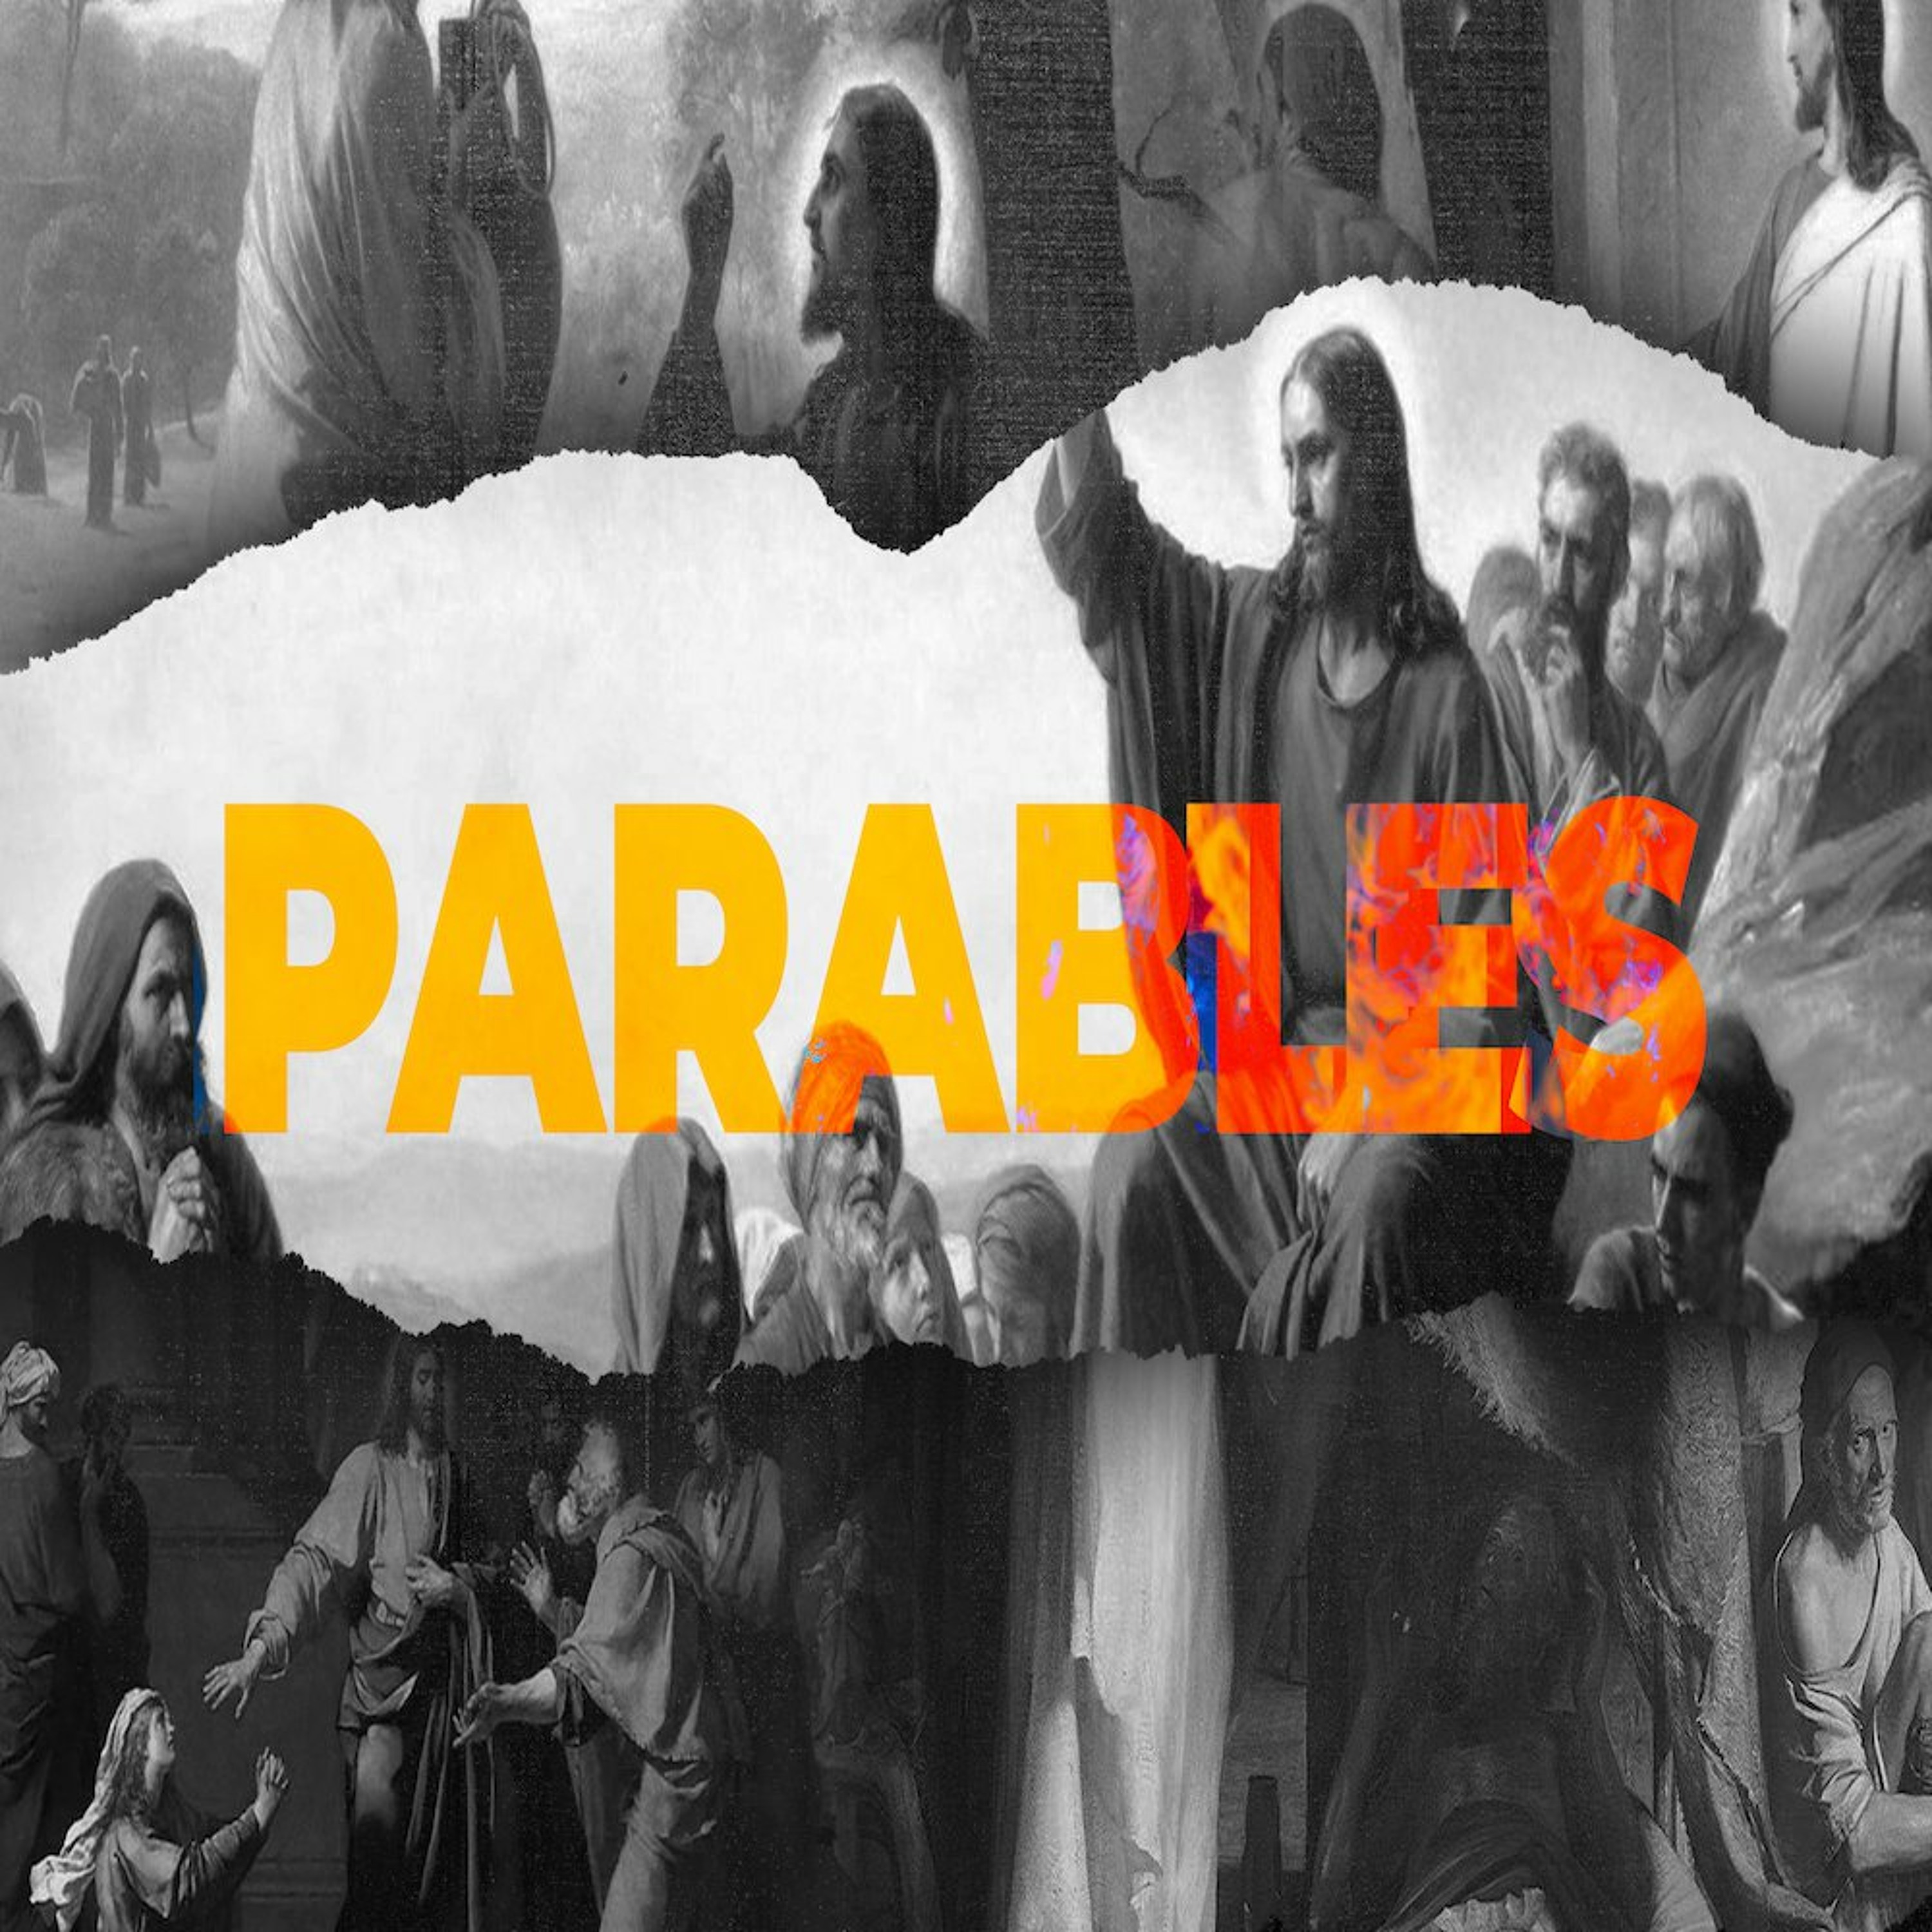 Parables - Week 4